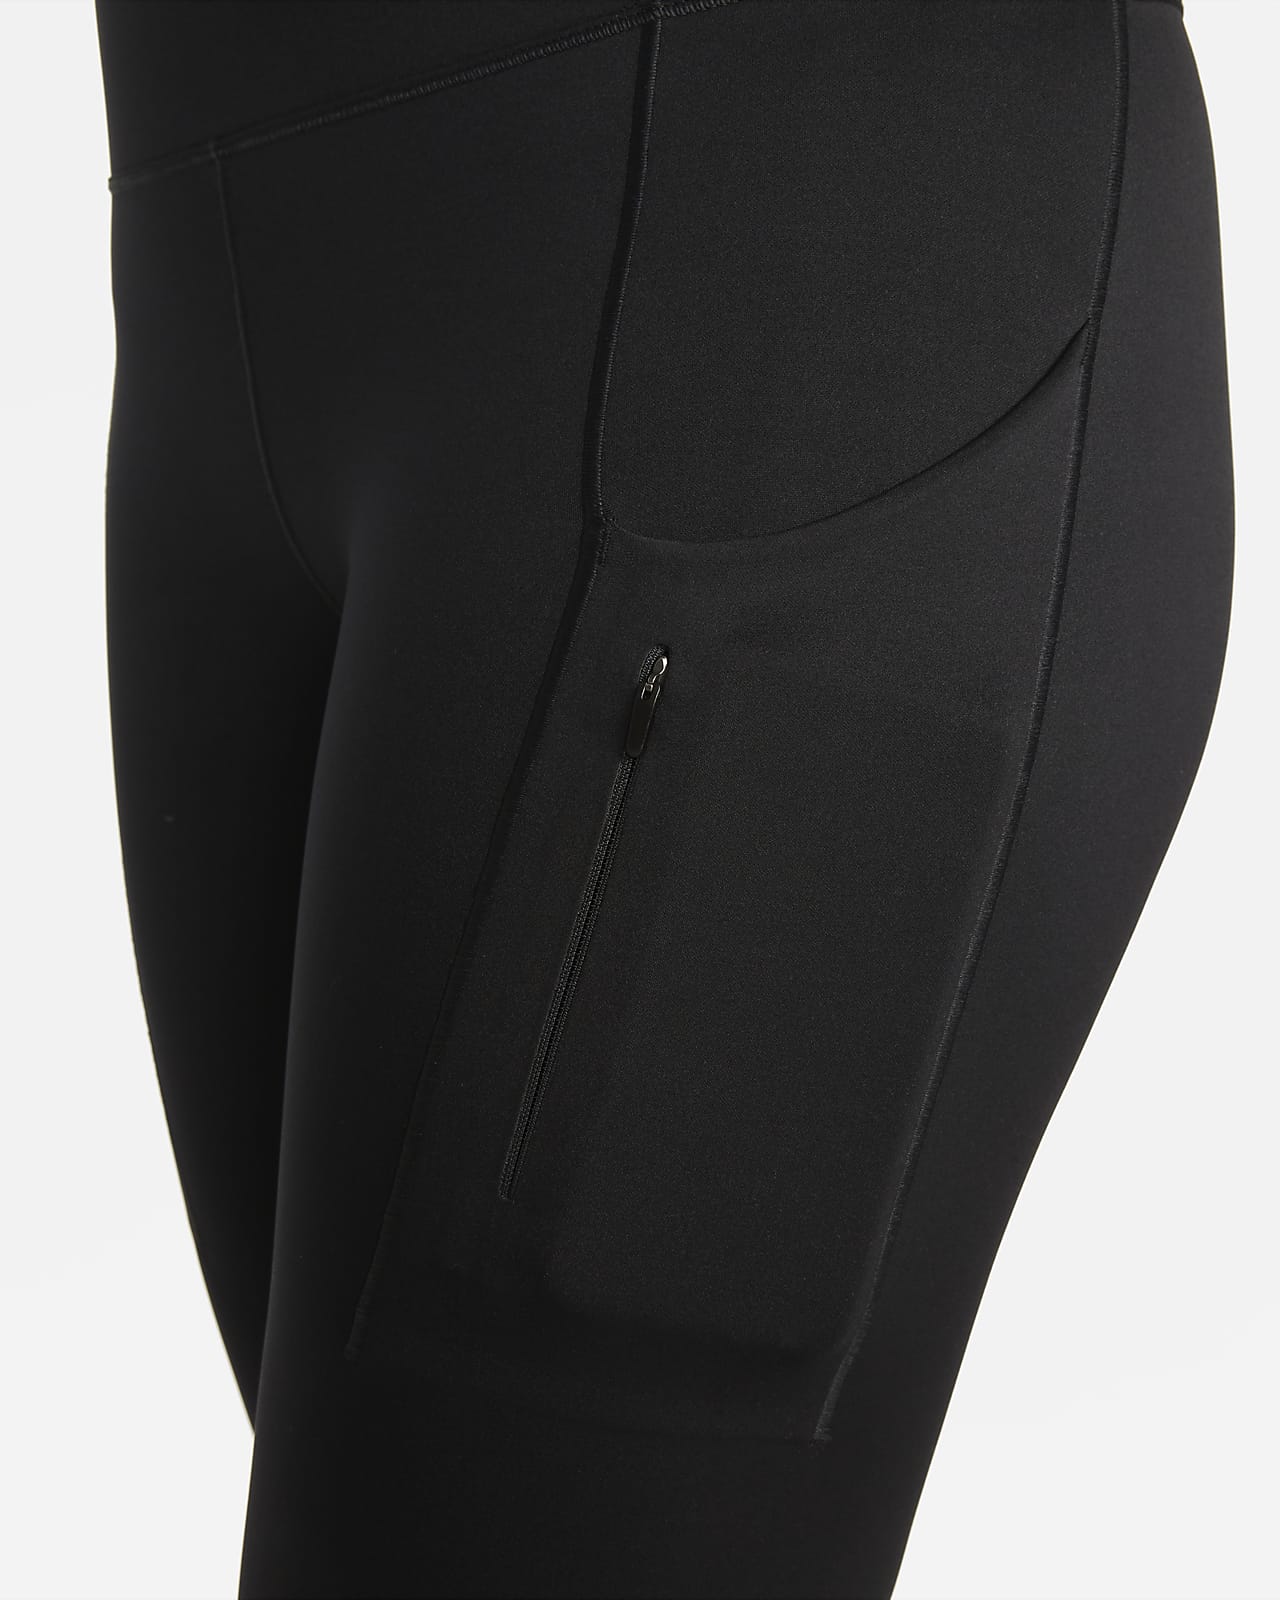 lululemon black capri leggings size 6, zip pocket in back, tie